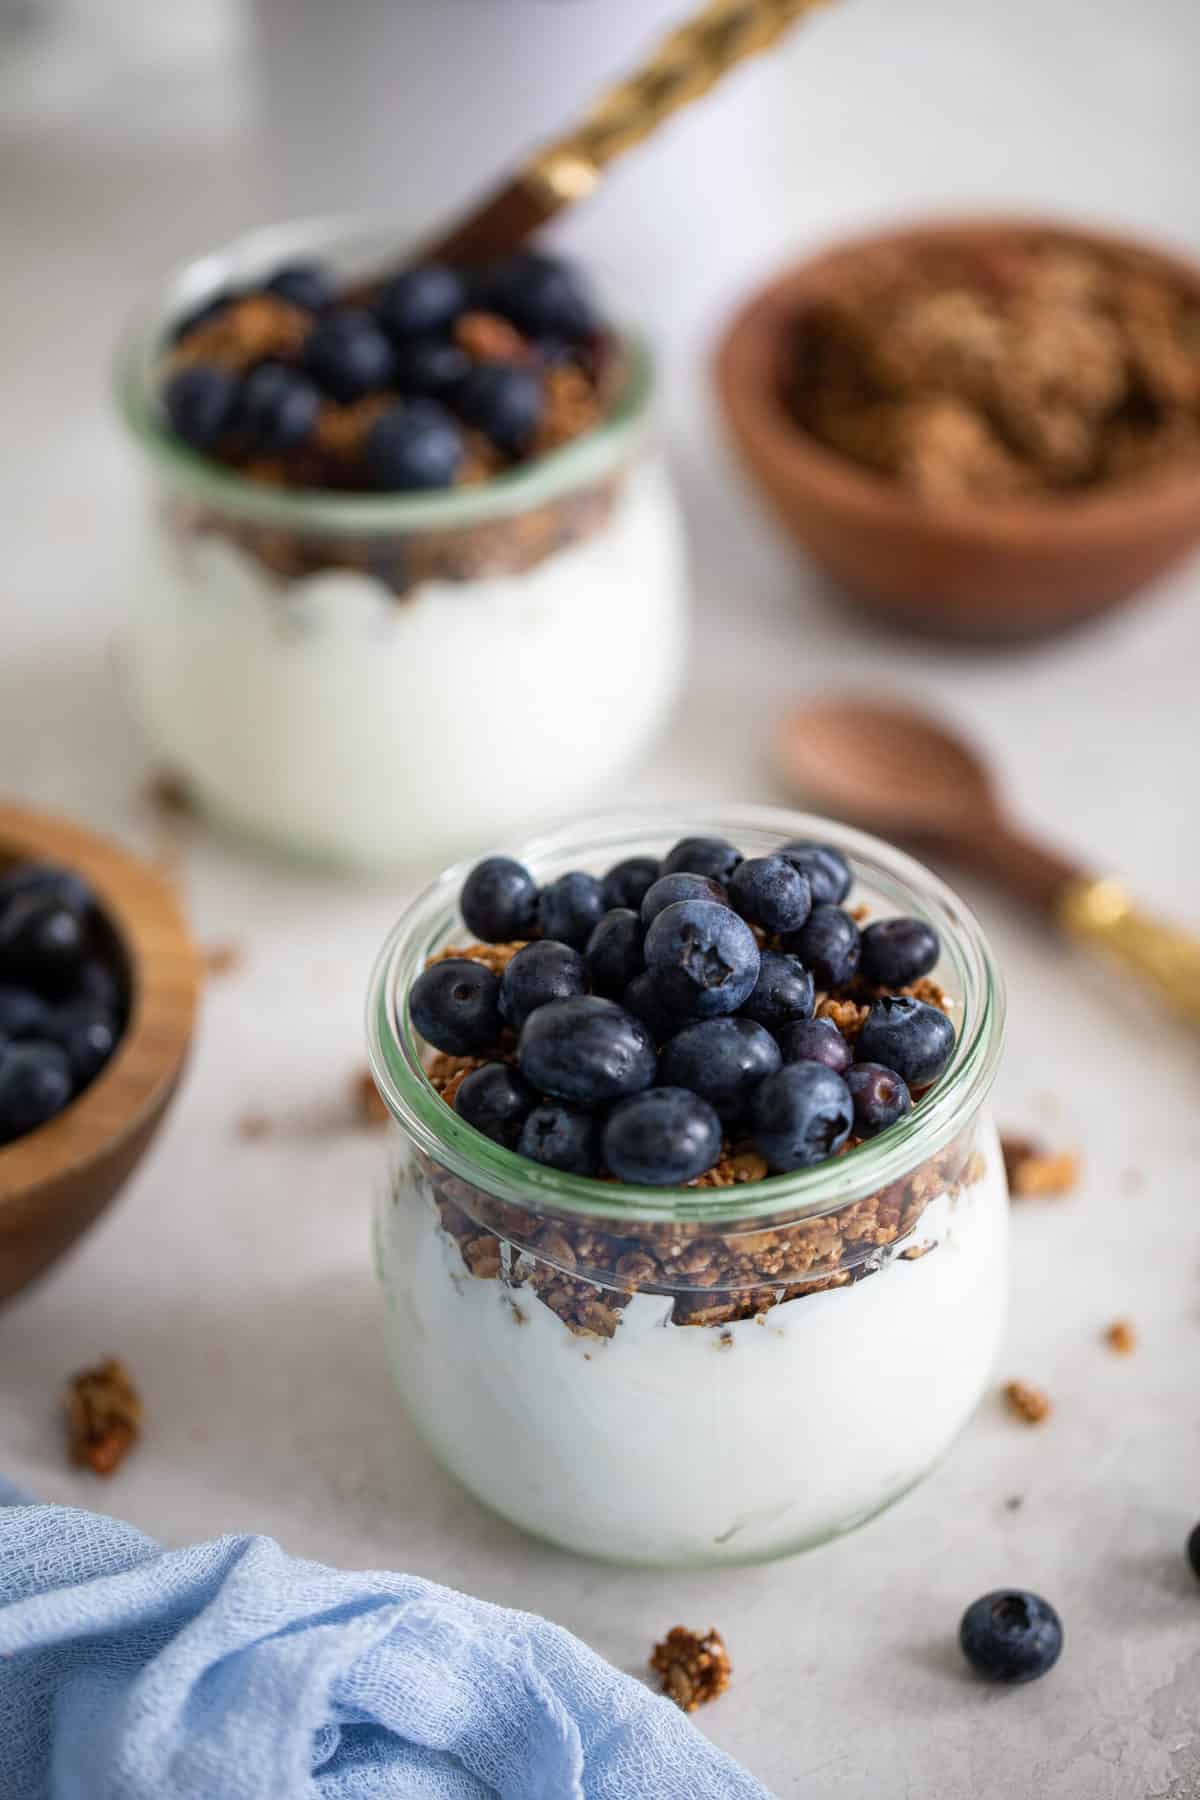 https://www.orchidsandsweettea.com/wp-content/uploads/2021/03/Blueberry-Yogurt-w-Granola-7-of-9-scaled.jpg